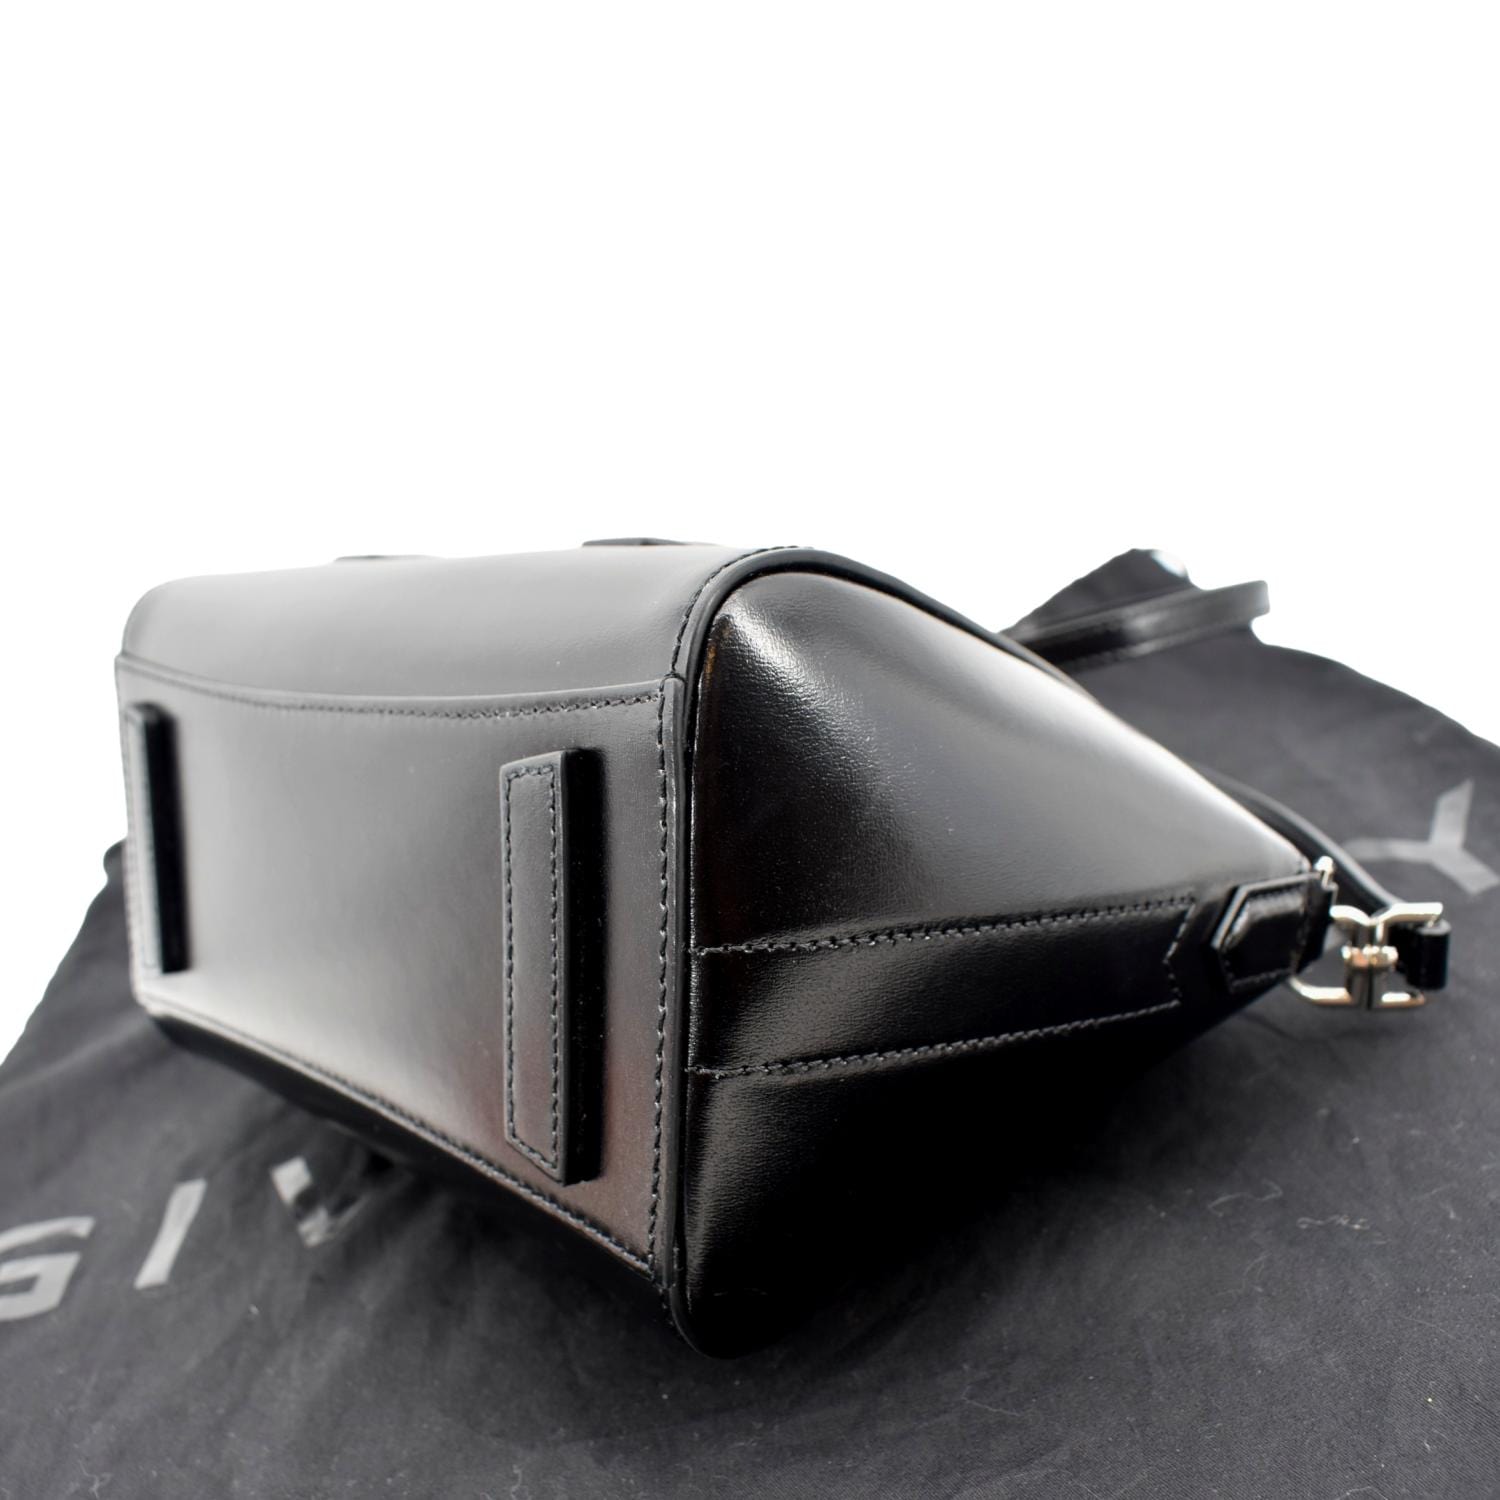 Antigona mini leather tote bag, Givenchy